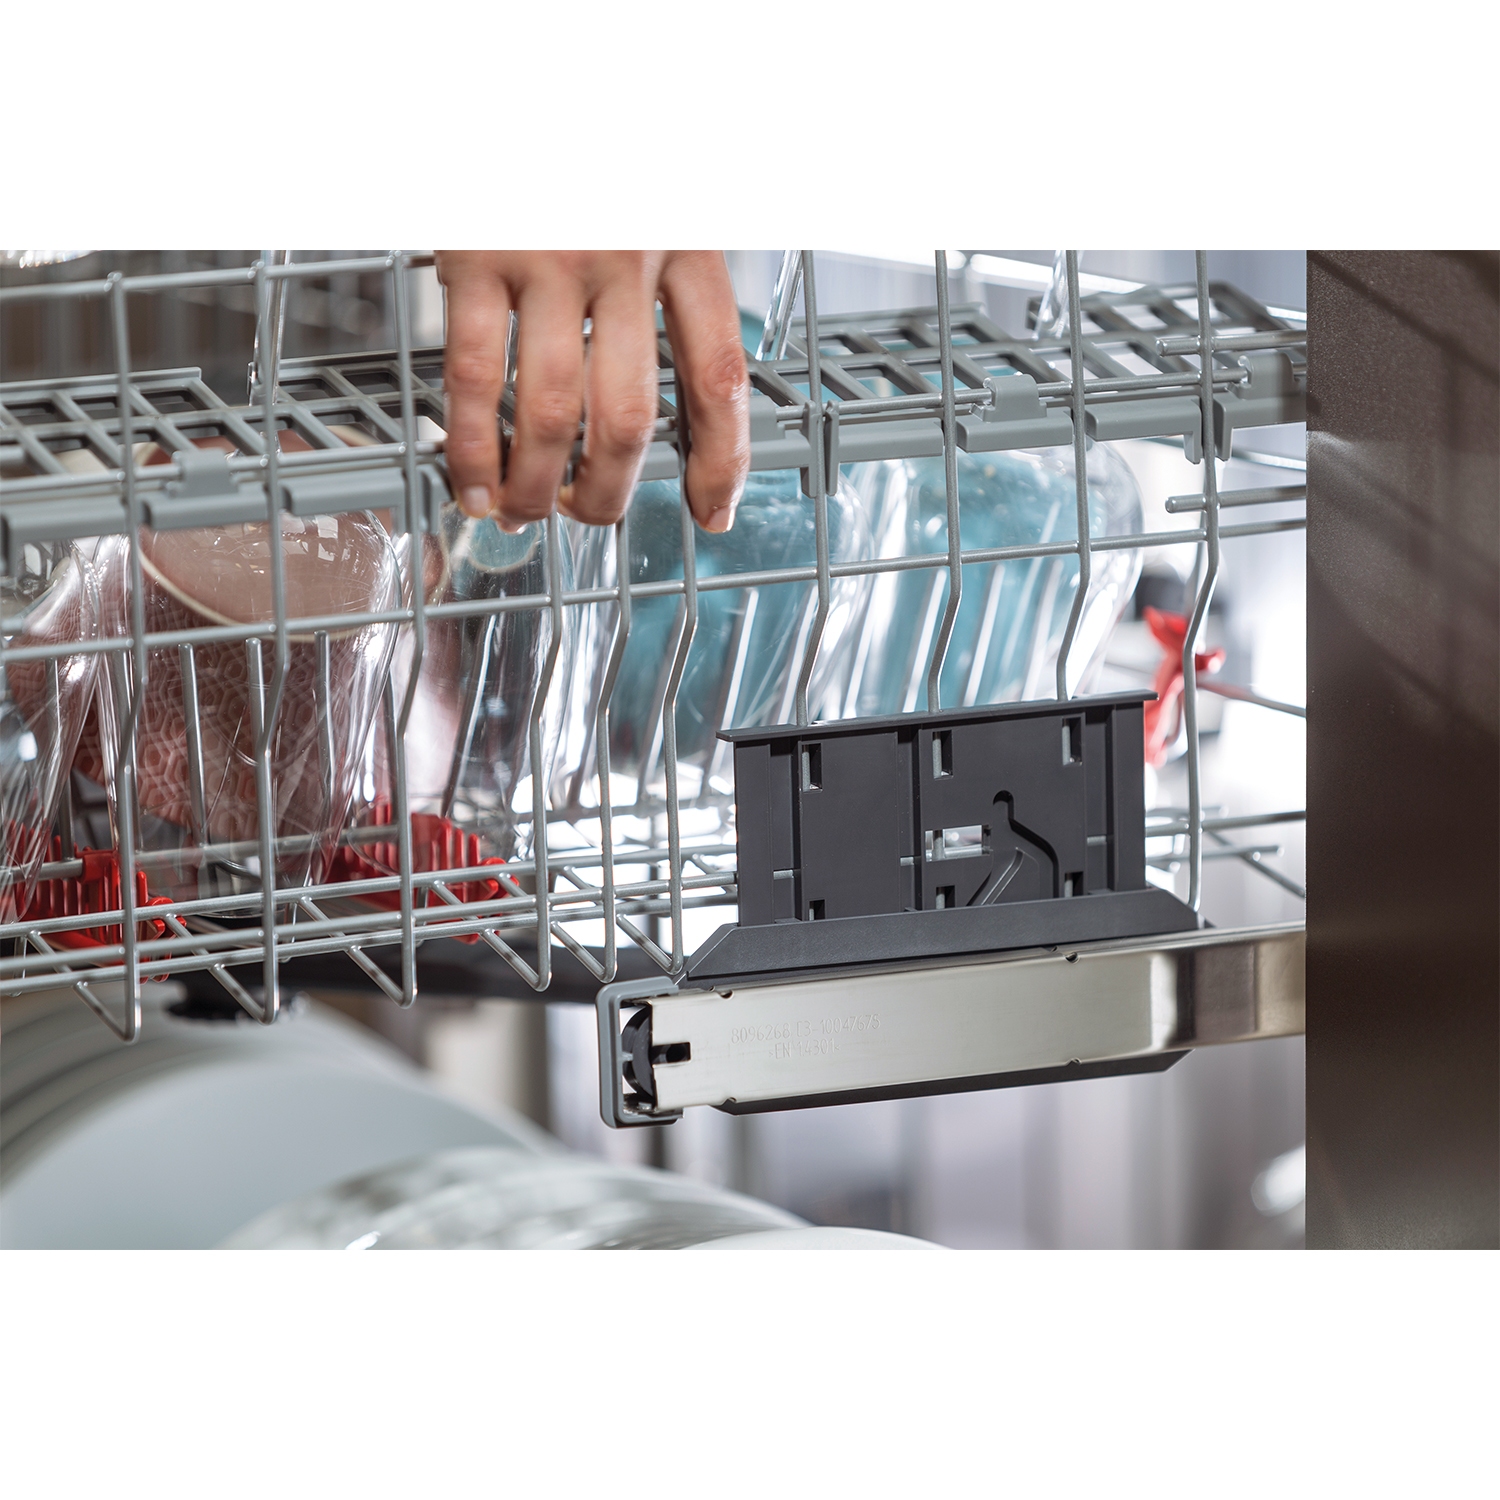 Hisense HV671C60UK Integrated Full Size Dishwasher - 16 Place Settings - 3